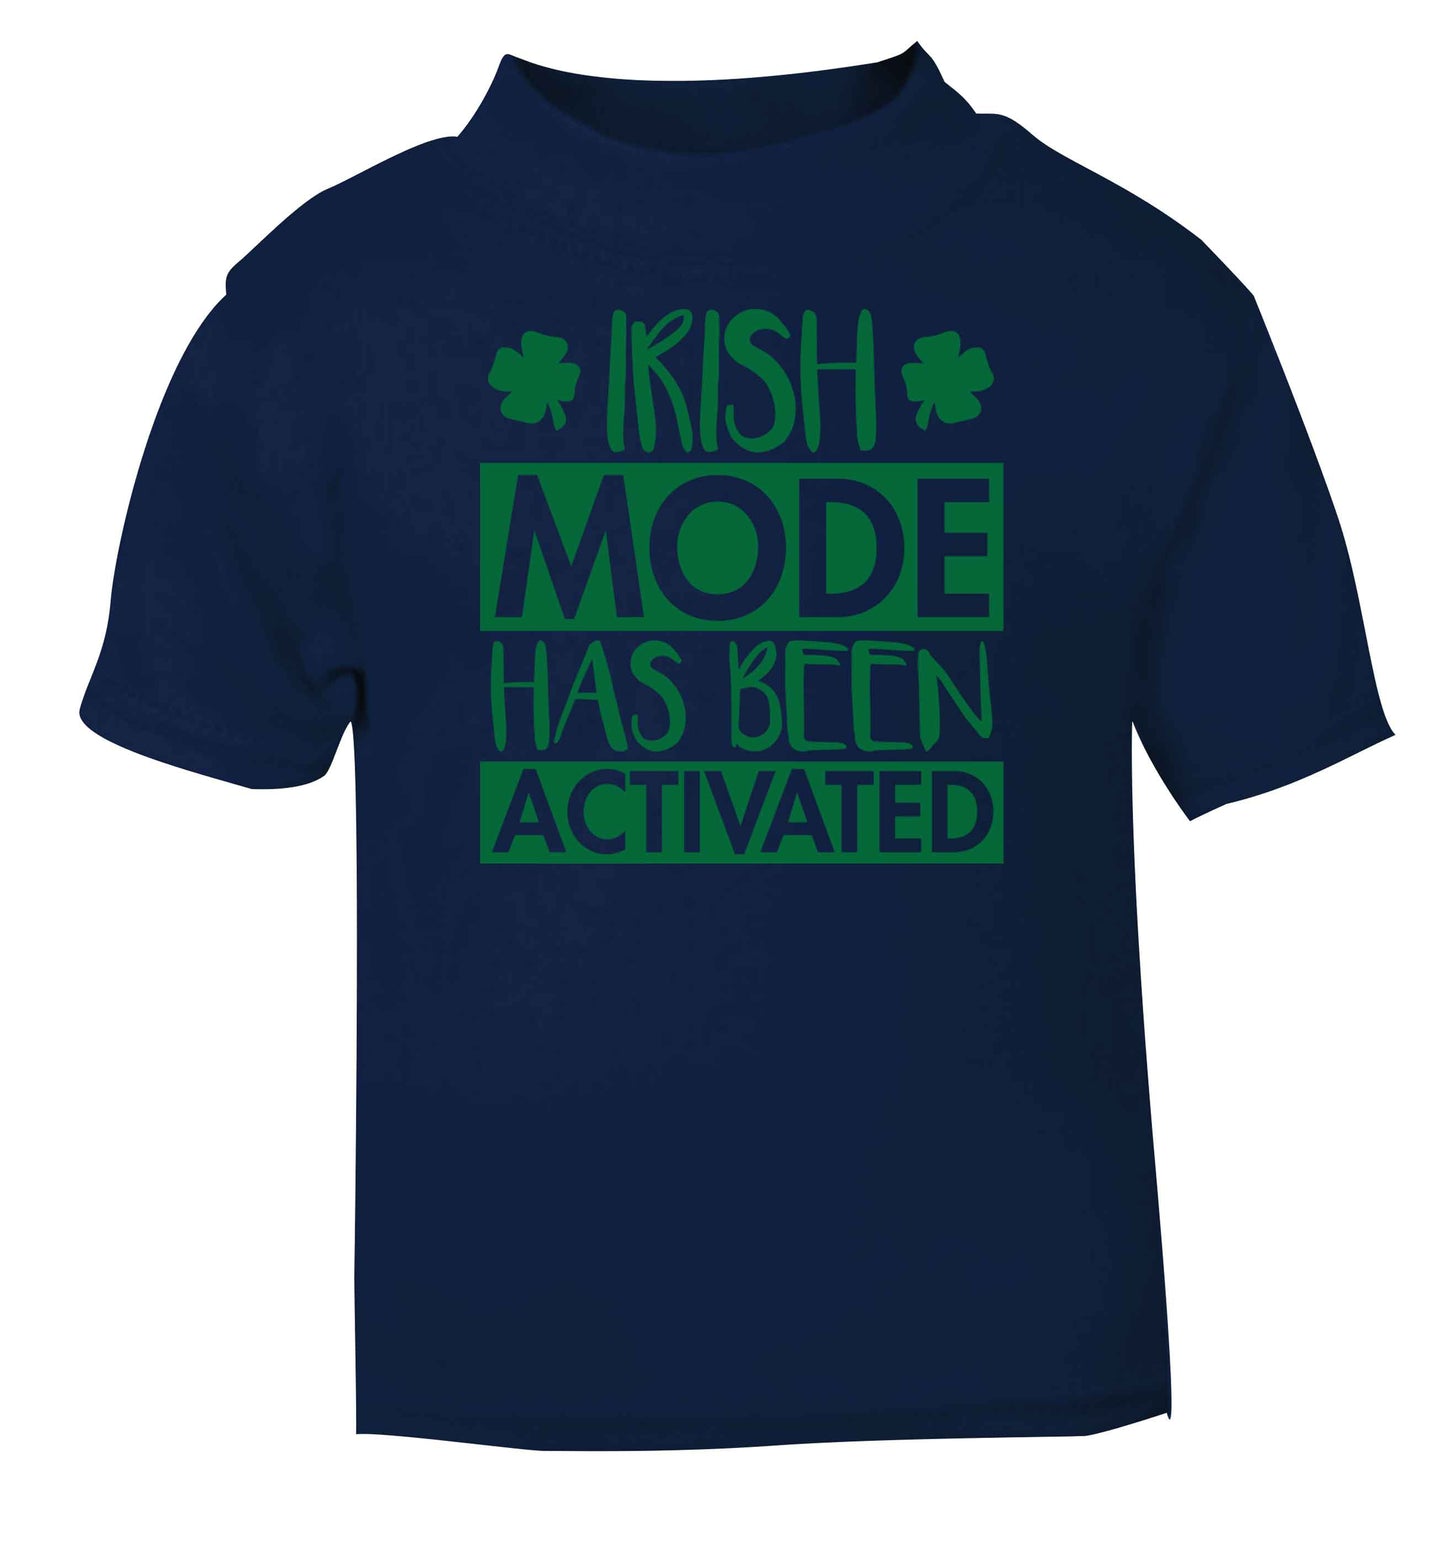 Irish mode has been activated navy baby toddler Tshirt 2 Years